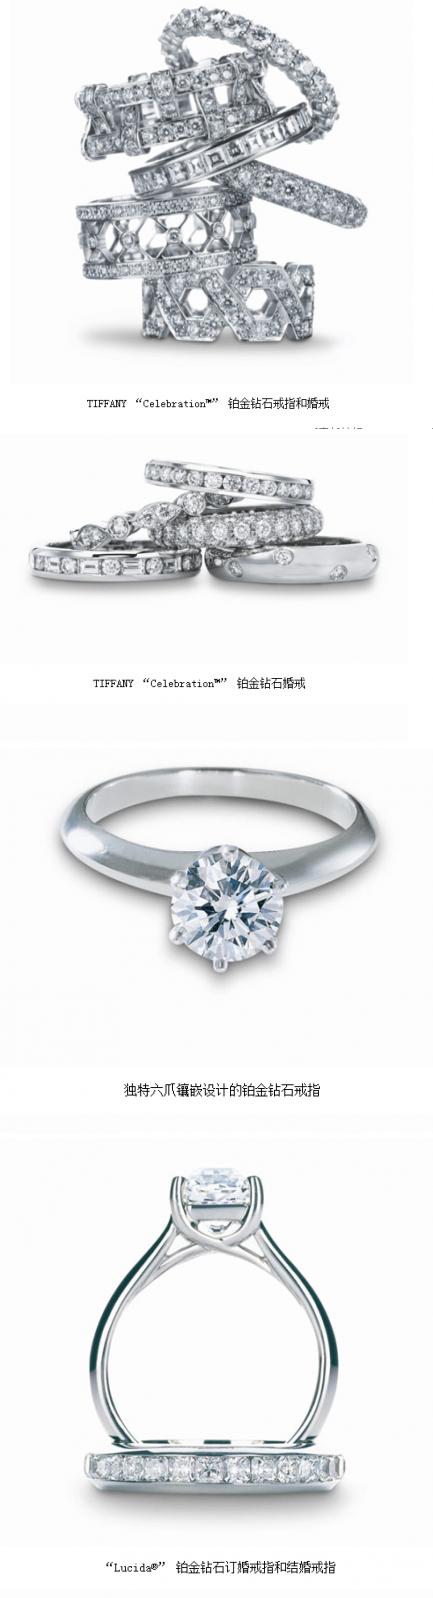 Azimut-BenettiTiffany （蒂芙尼）青睐铂金与钻石的完美搭配，成就顶级铂金订婚钻戒。其始创于1886年的著名六爪镶嵌铂金戒指，代表精湛的工艺，也象征了爱情的唯美，至今仍是世界上最闻名遐迩的戒指款式之一。